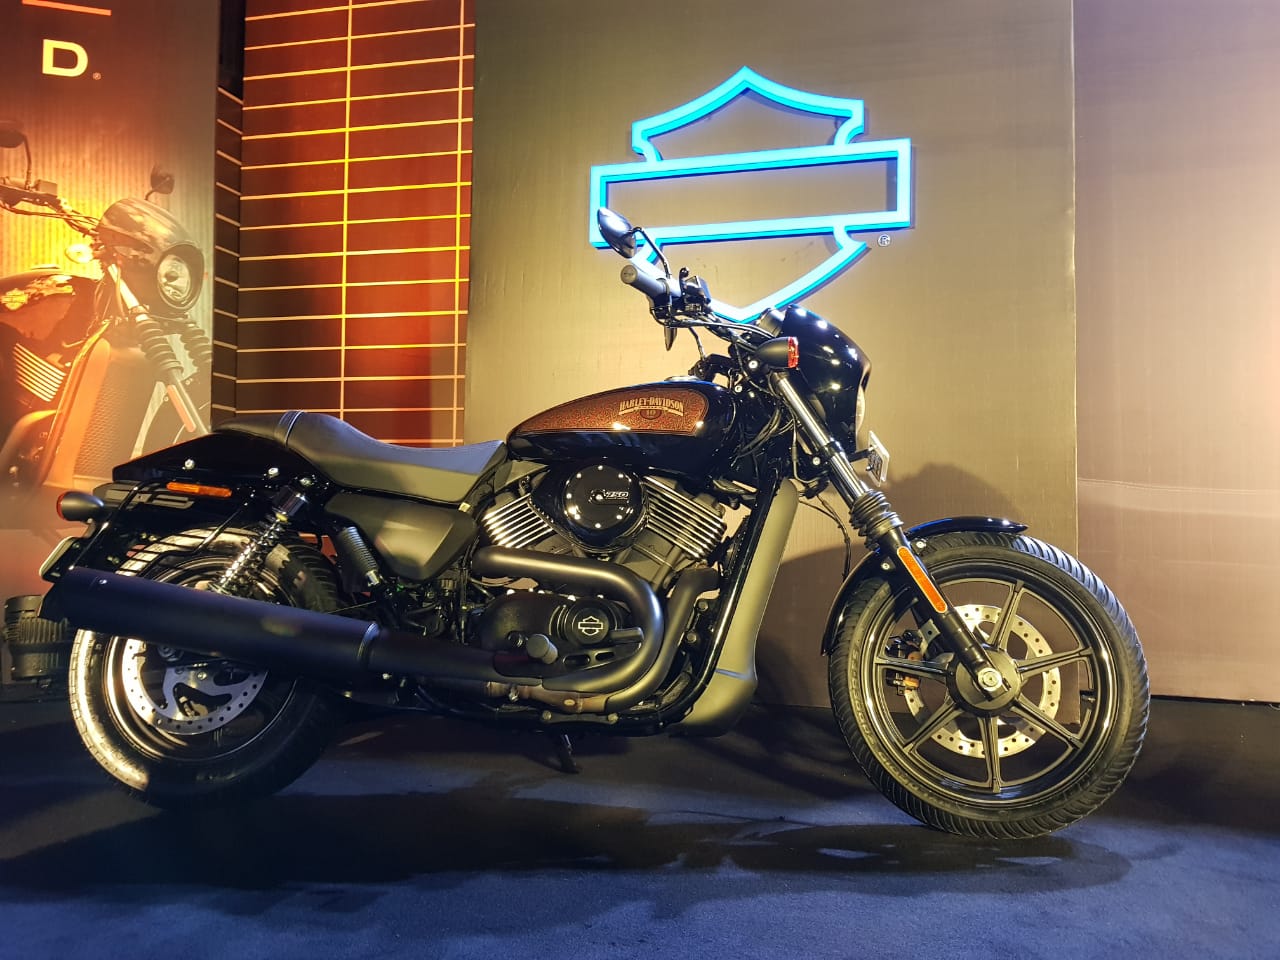 Harley Davidson Livewire Showcased Harley Davidson Street 750 Bs6 Launched